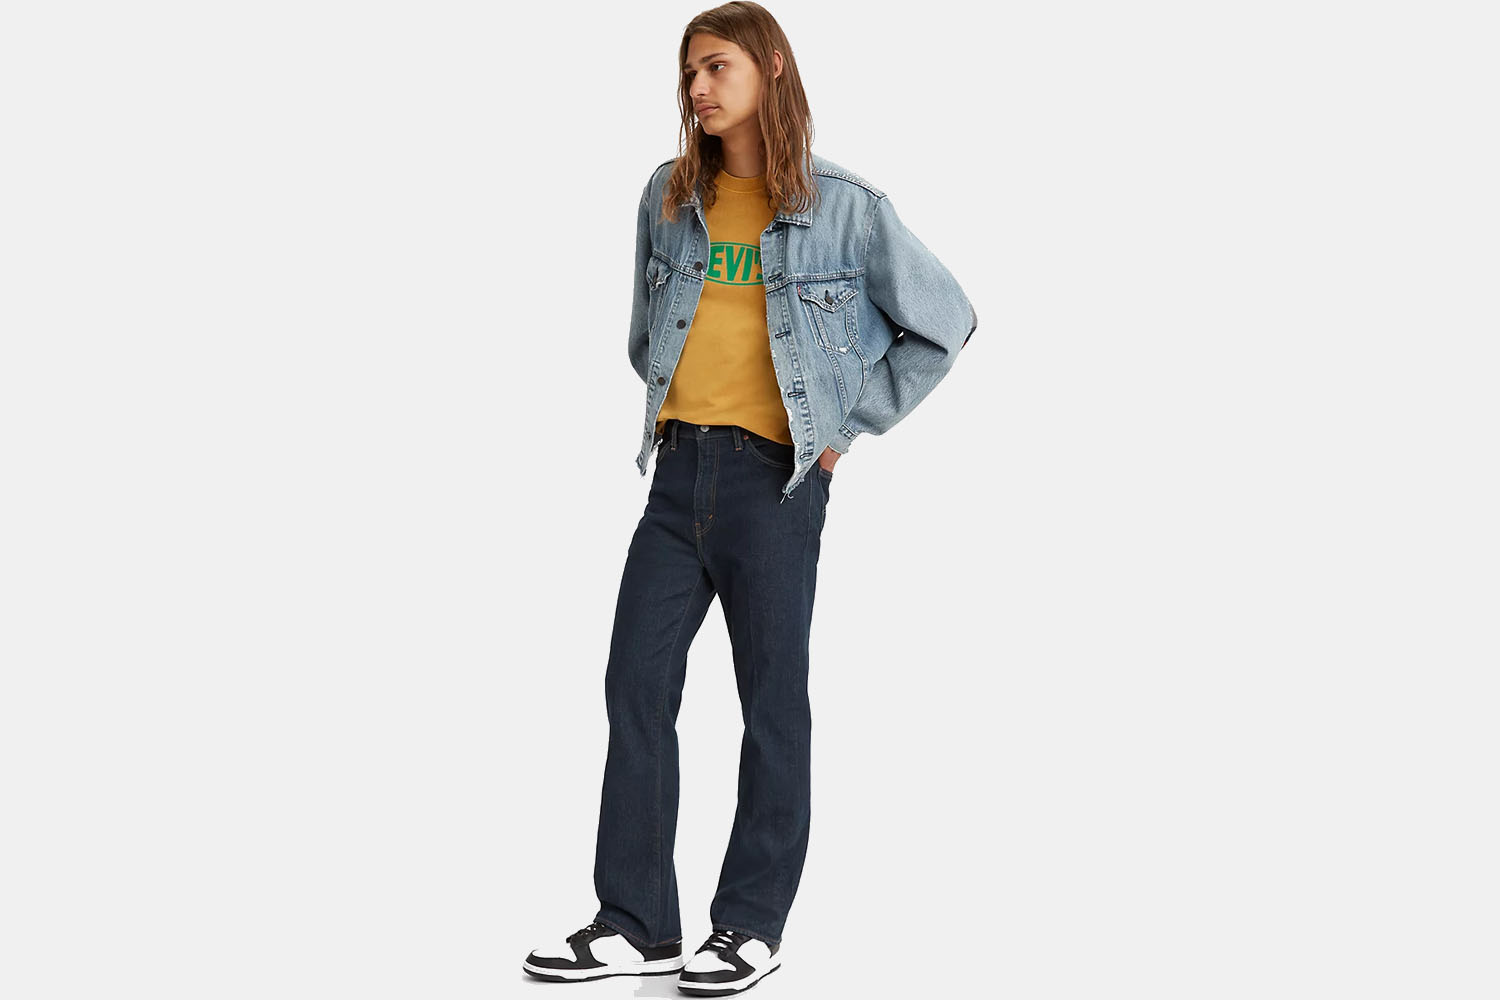 Shop Levi's So High '70s Inspired Jeans - InsideHook